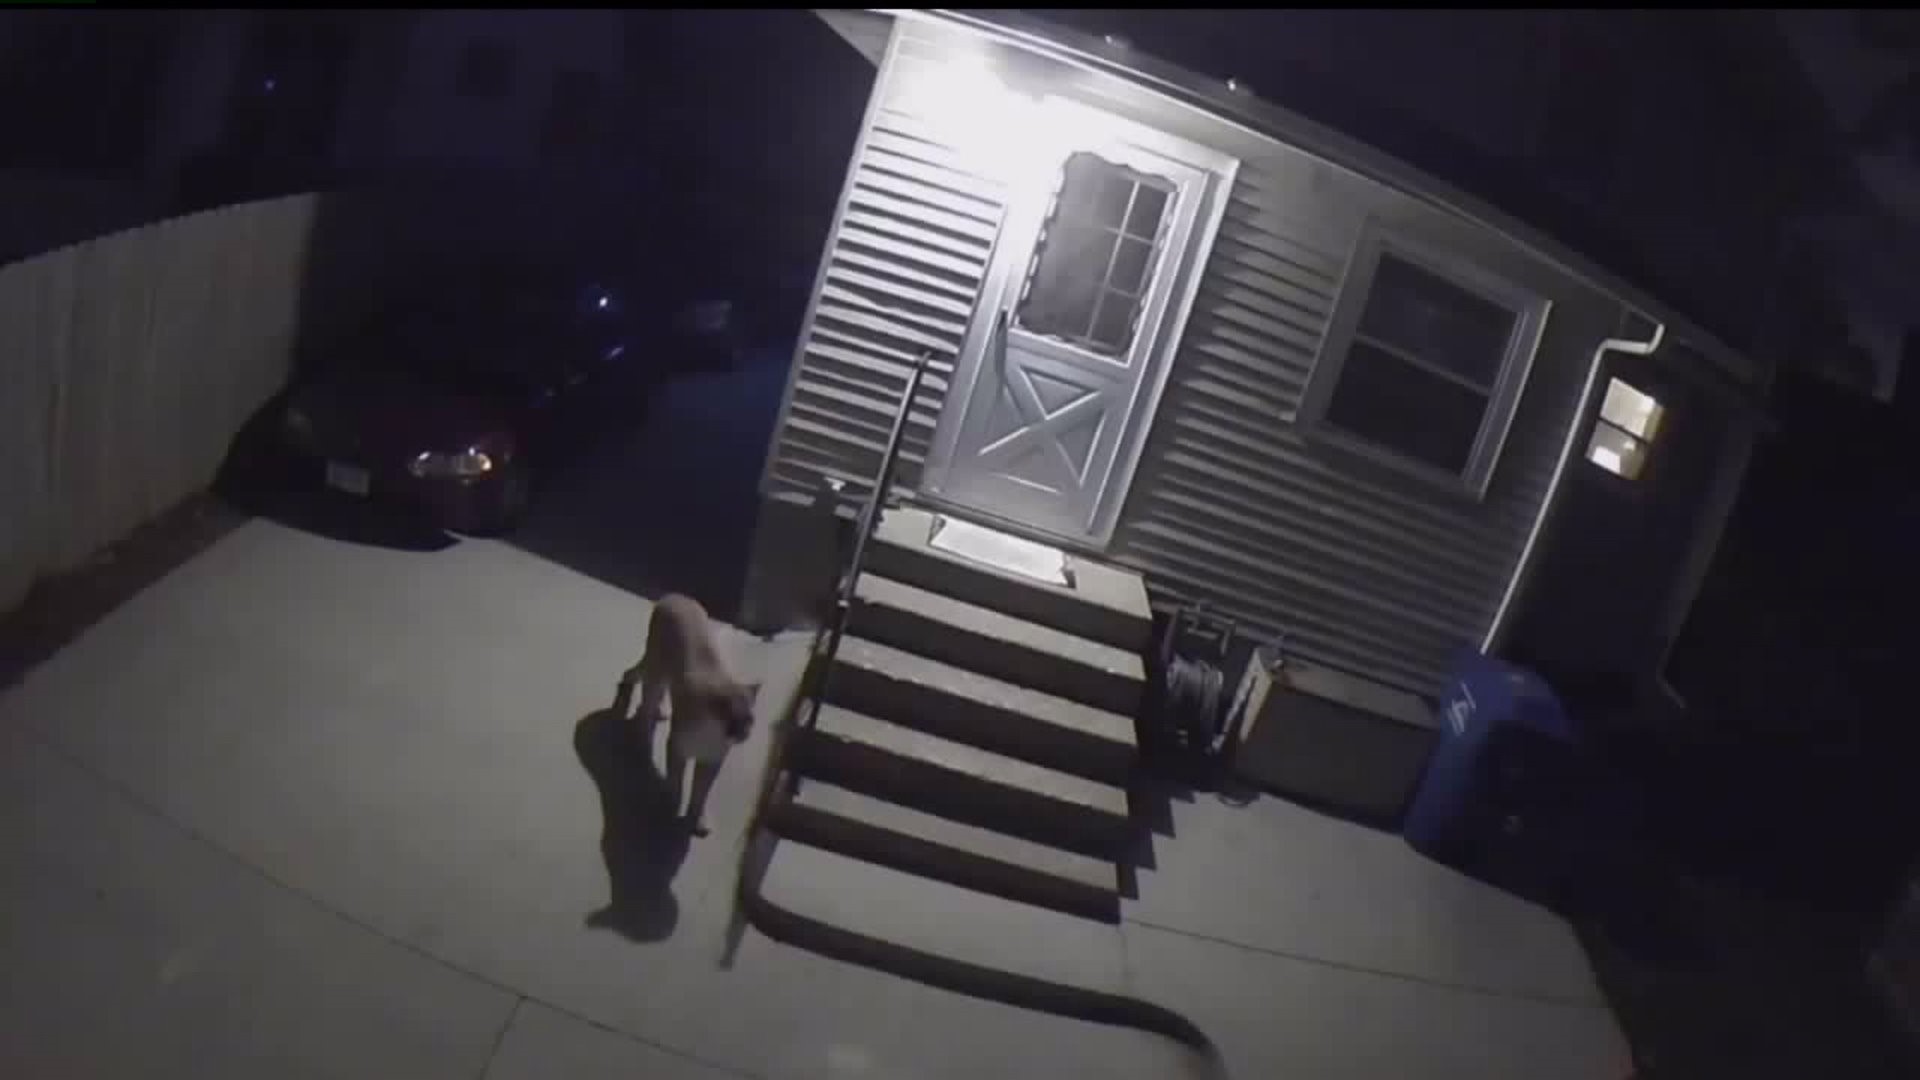 Mountain lion caught on surveillance video outside Des Moines home